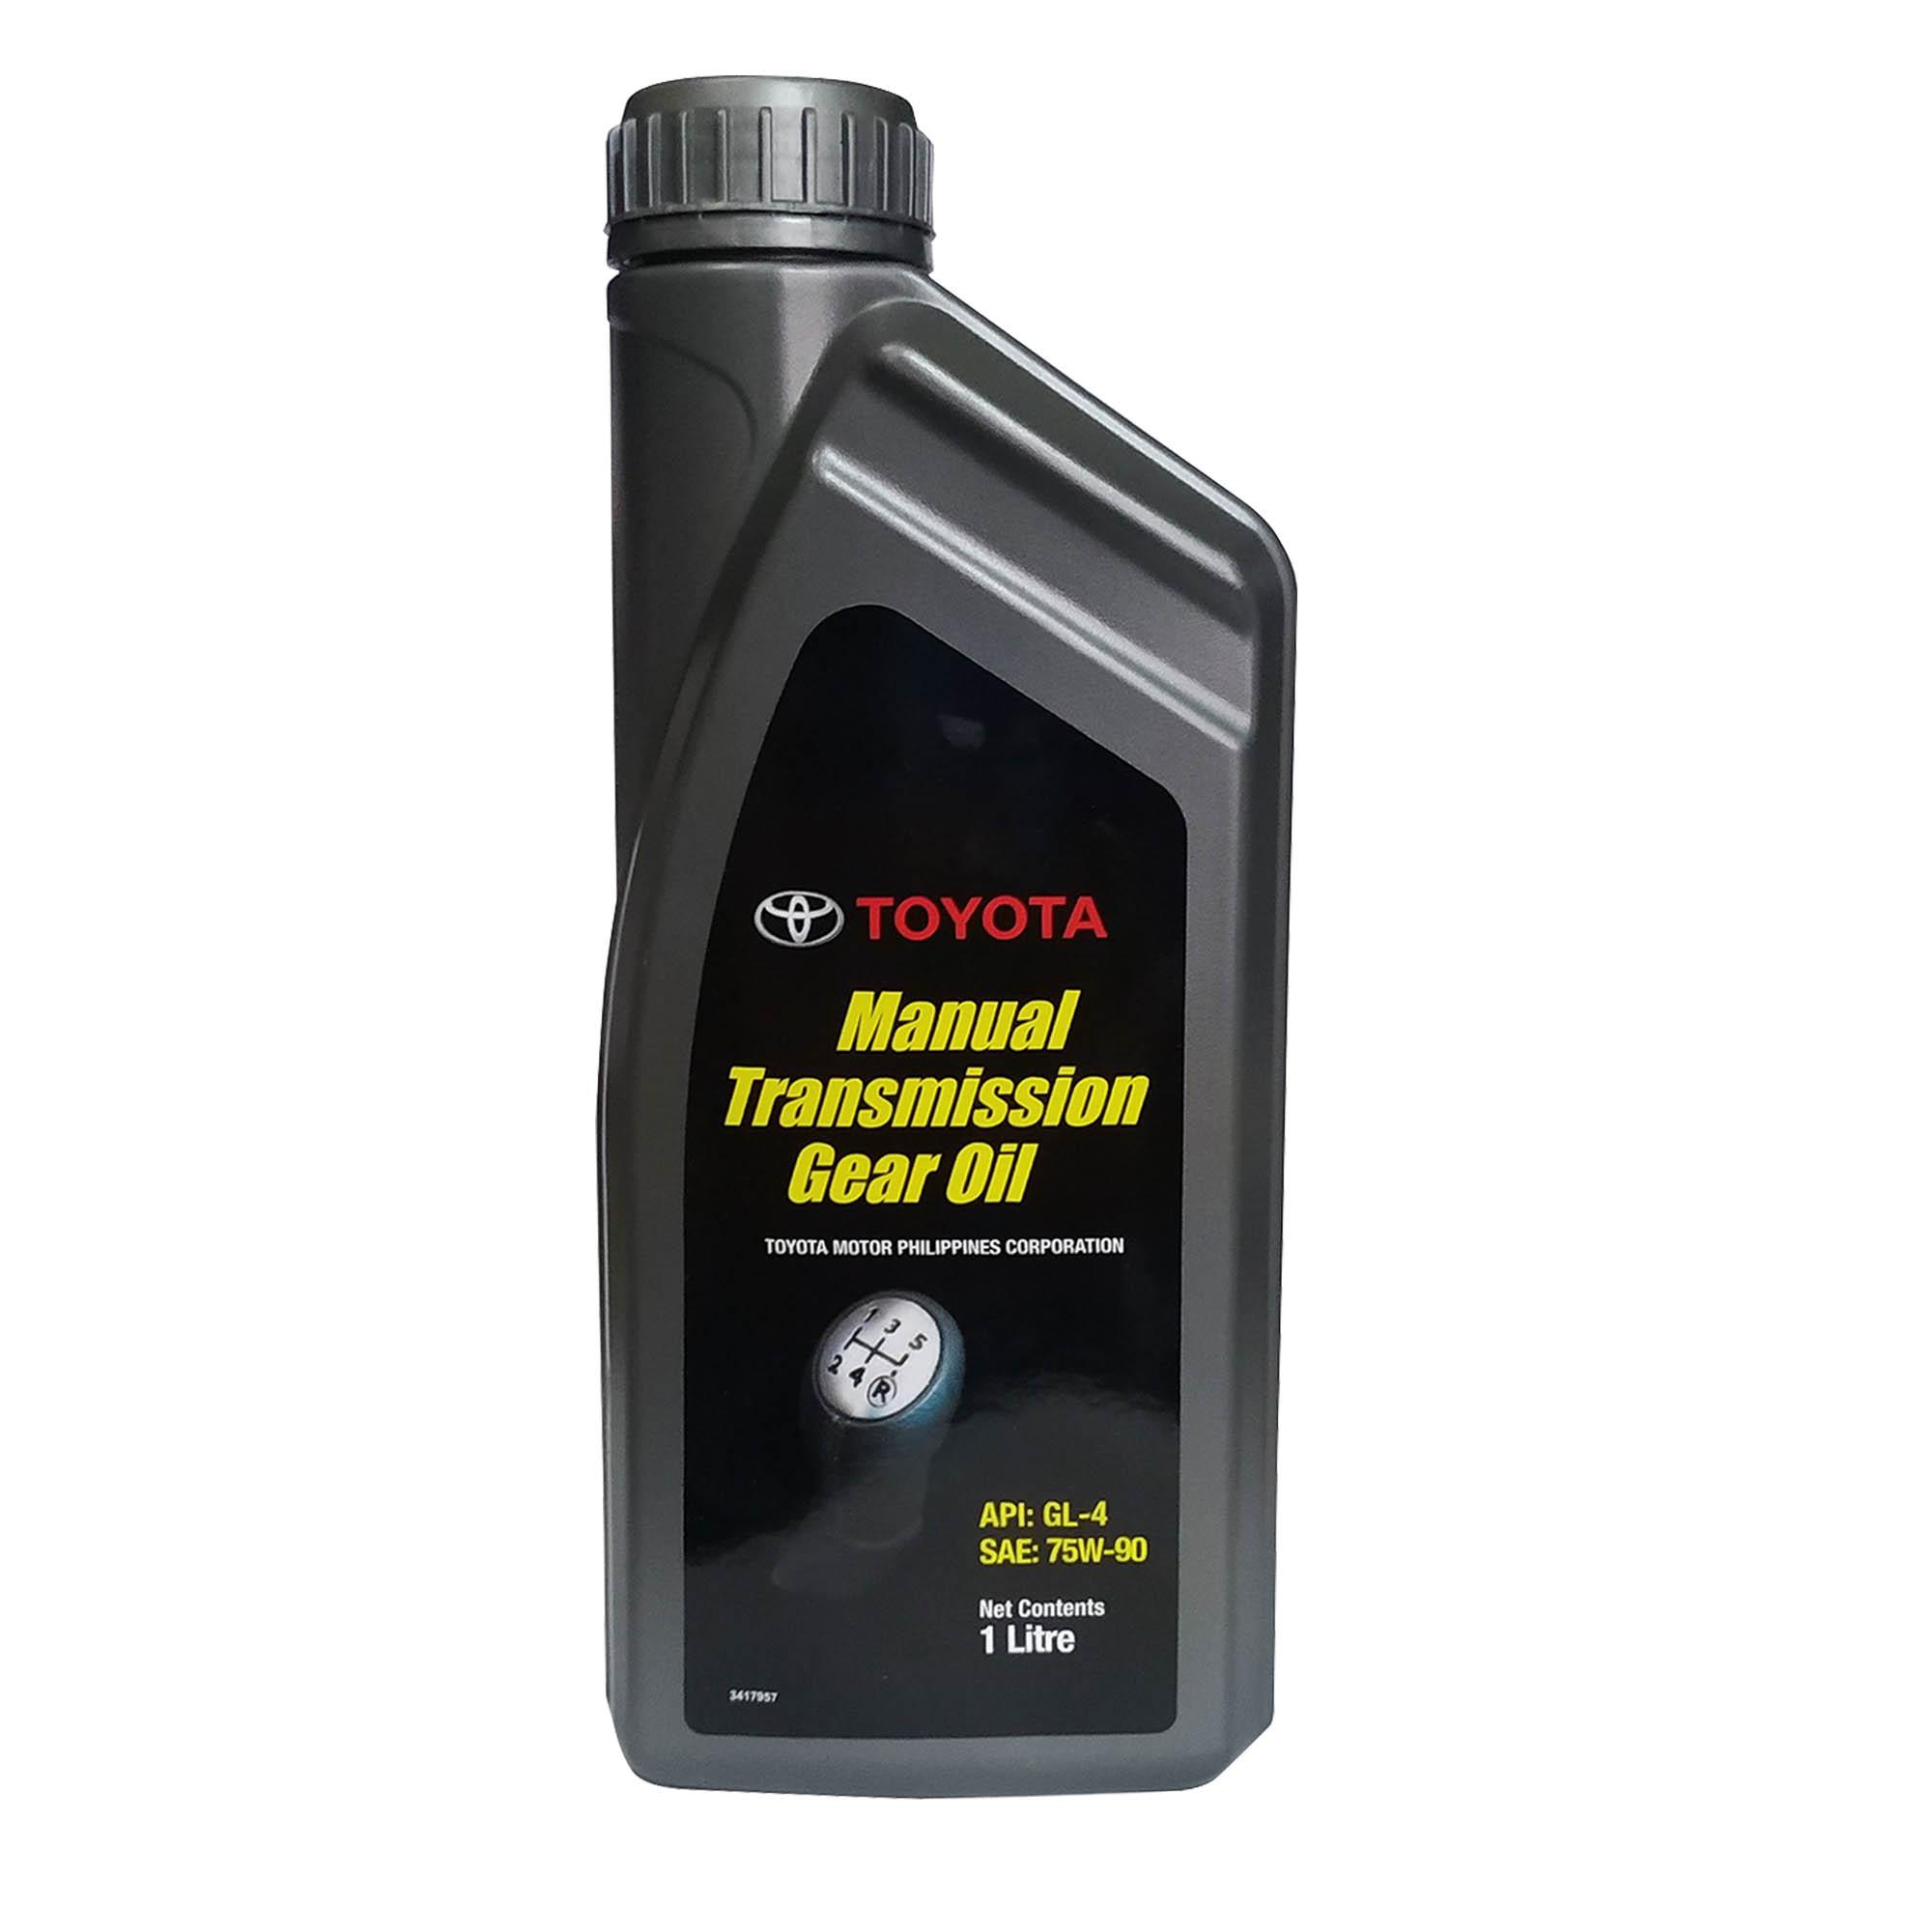 Д 12 масло. Toyota Gear Oil 75w-90 gl4. Transmission oil1661640. Toyota Genuine manual transmission Gear Oil lv API gl-4 авито.